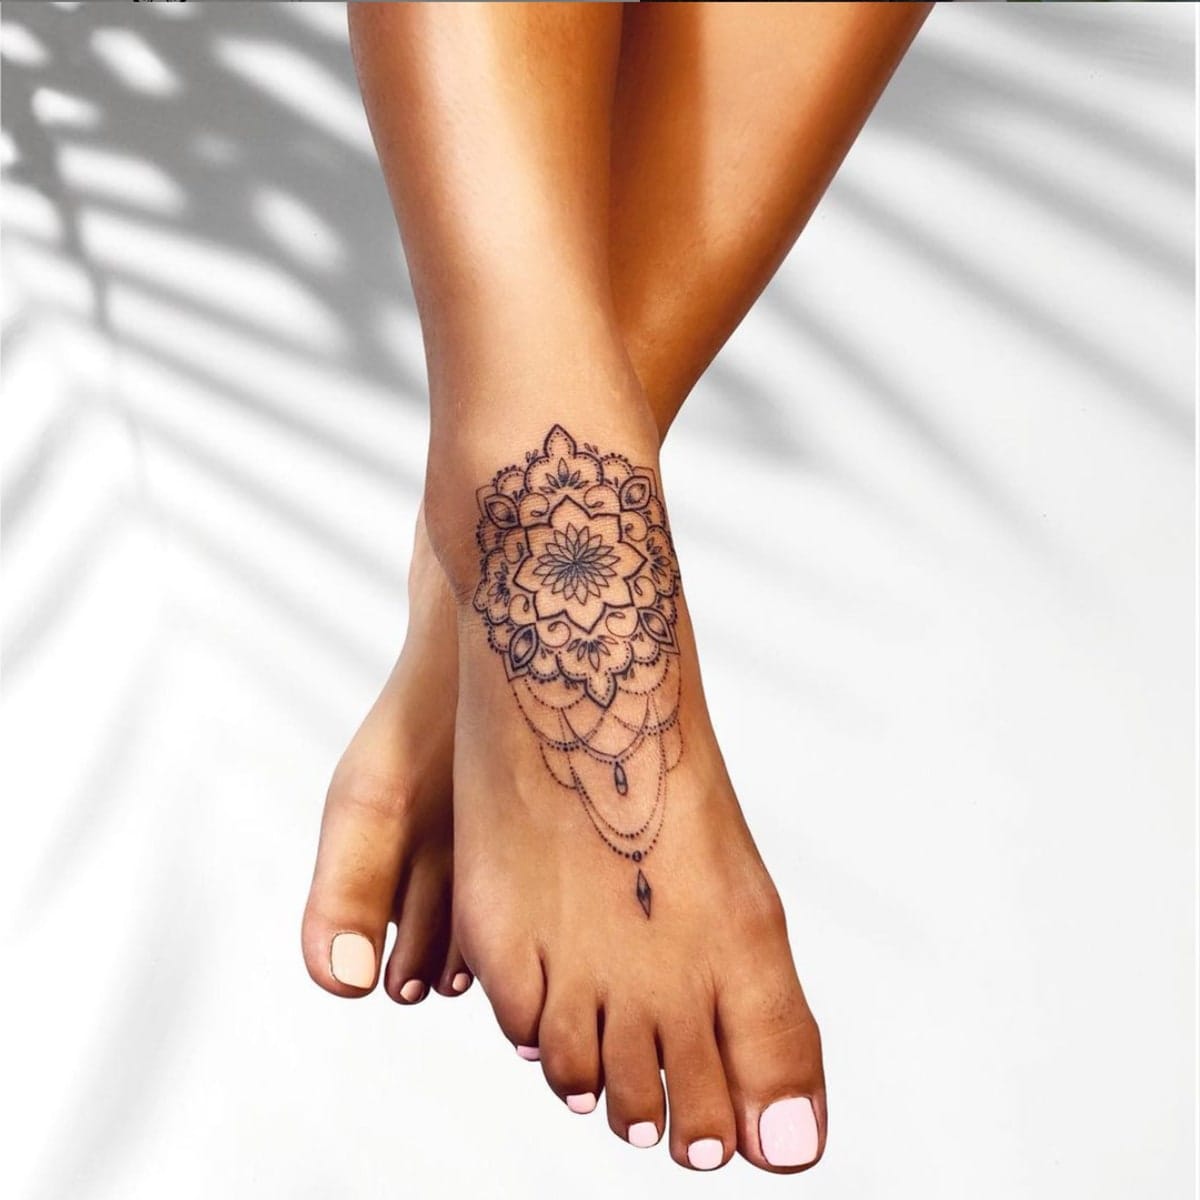 Lotus Tattoo on a foot.